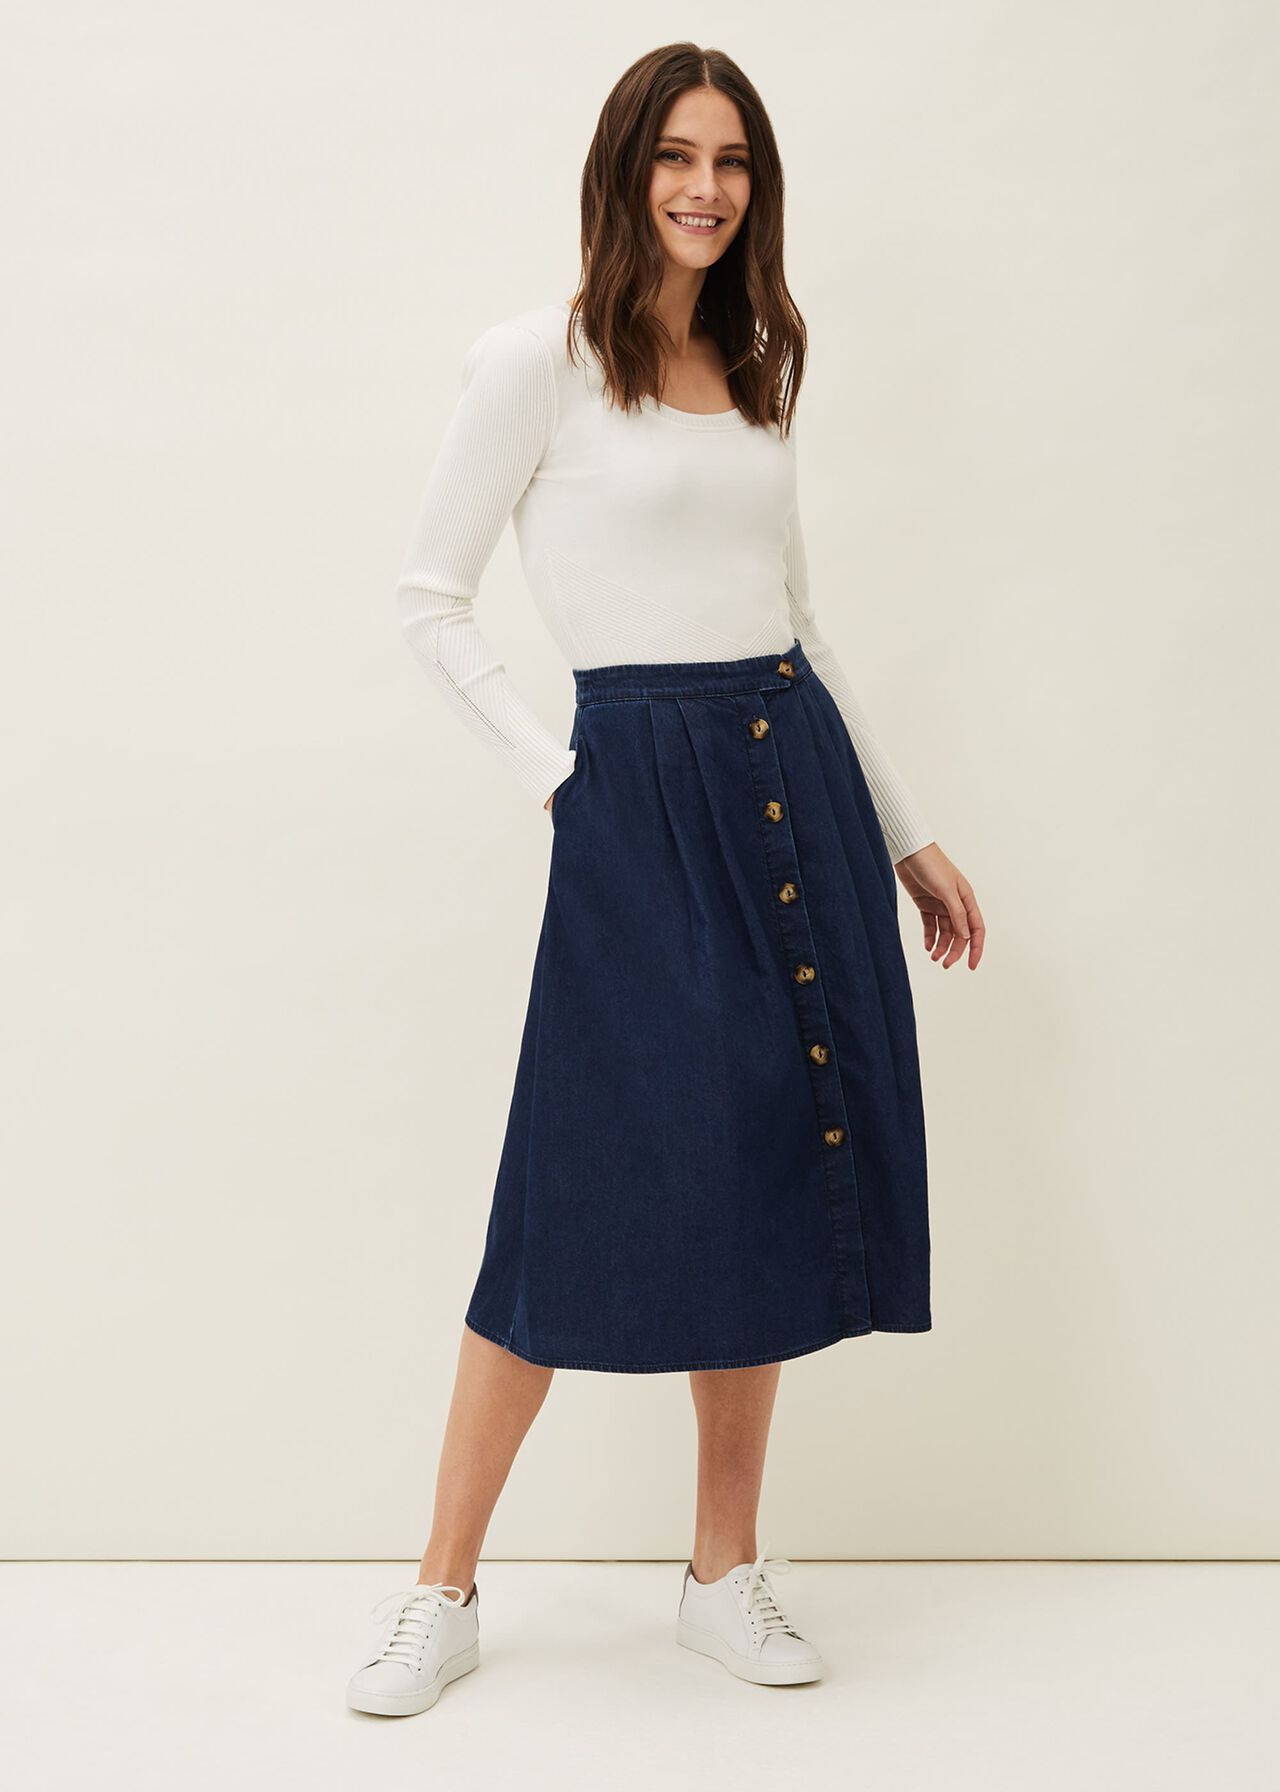 Lusia A- Line Denim Skirt